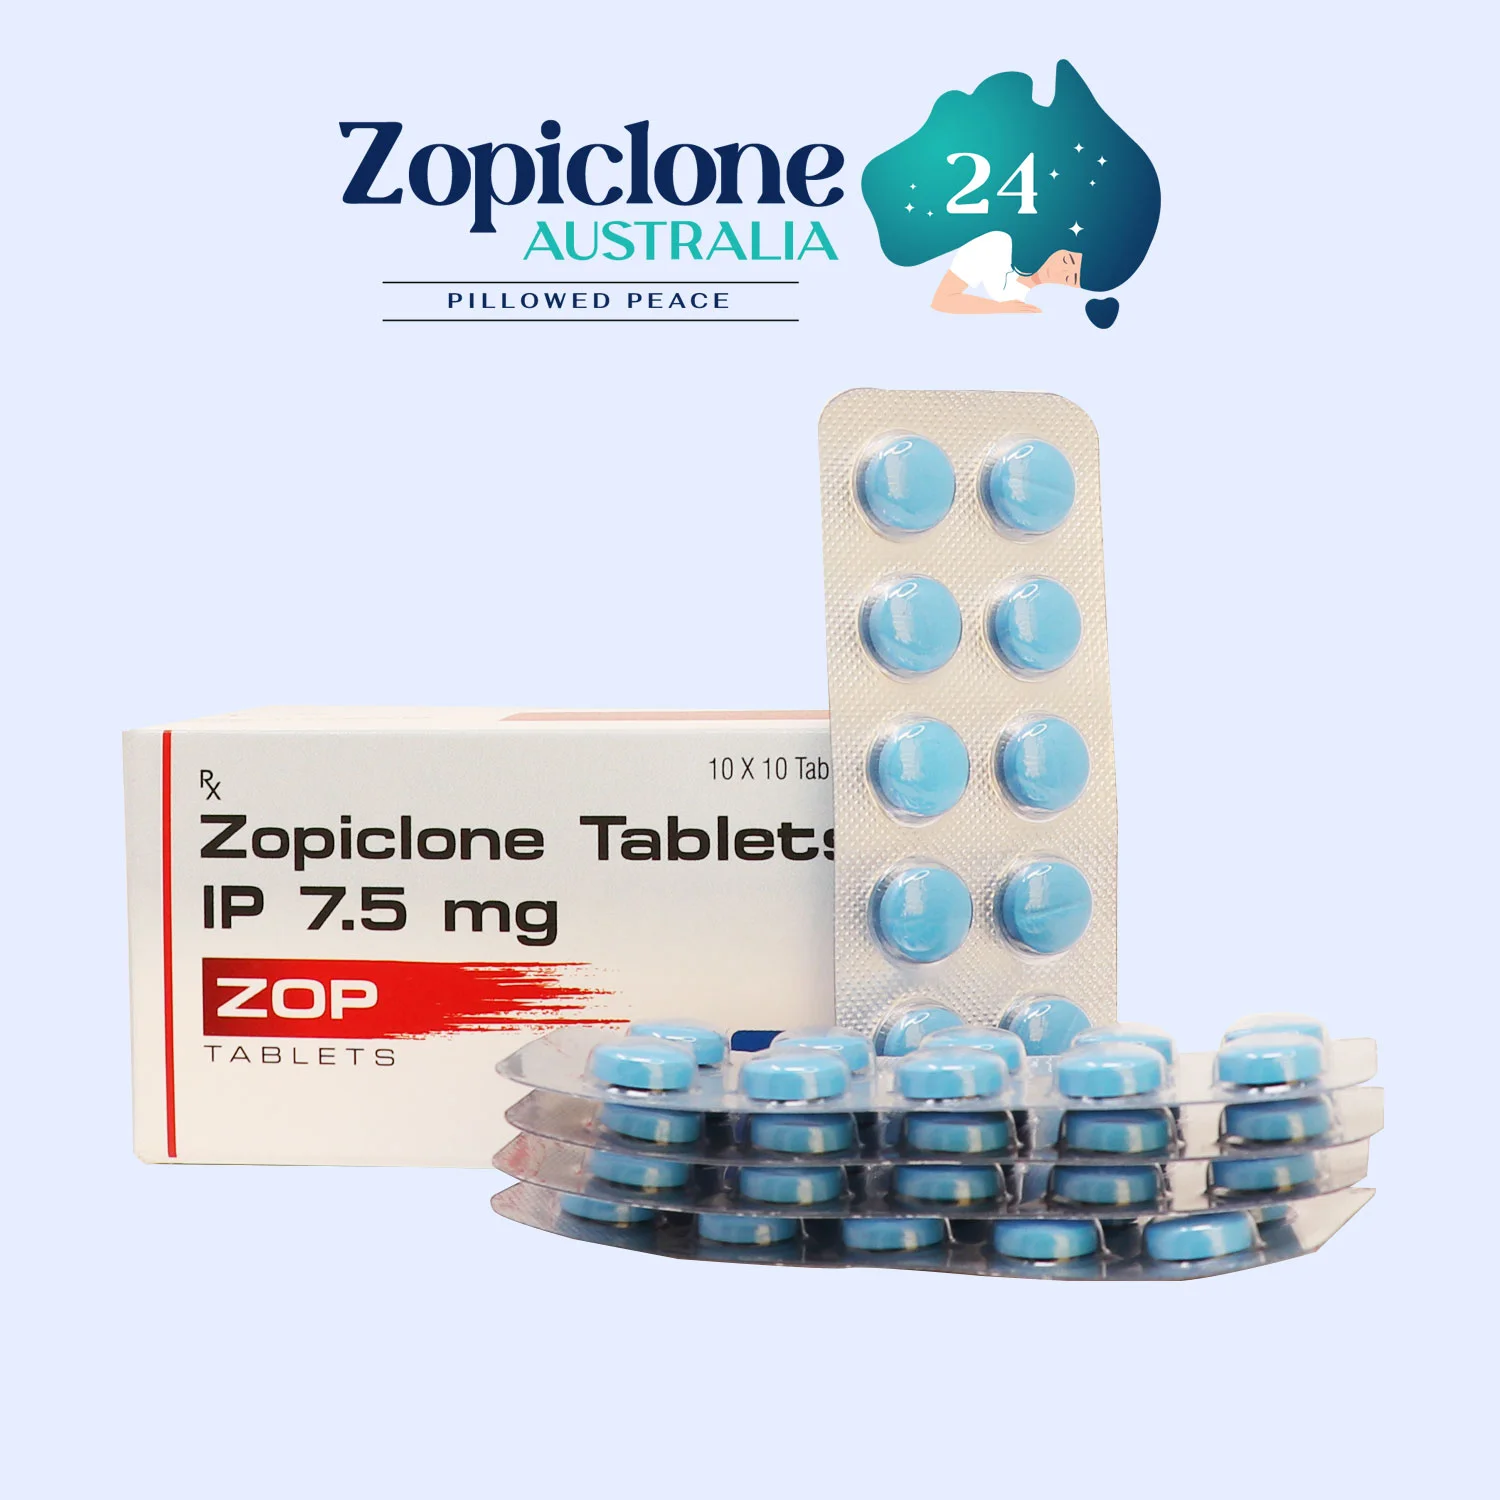 Zopiclone tablets in Australia